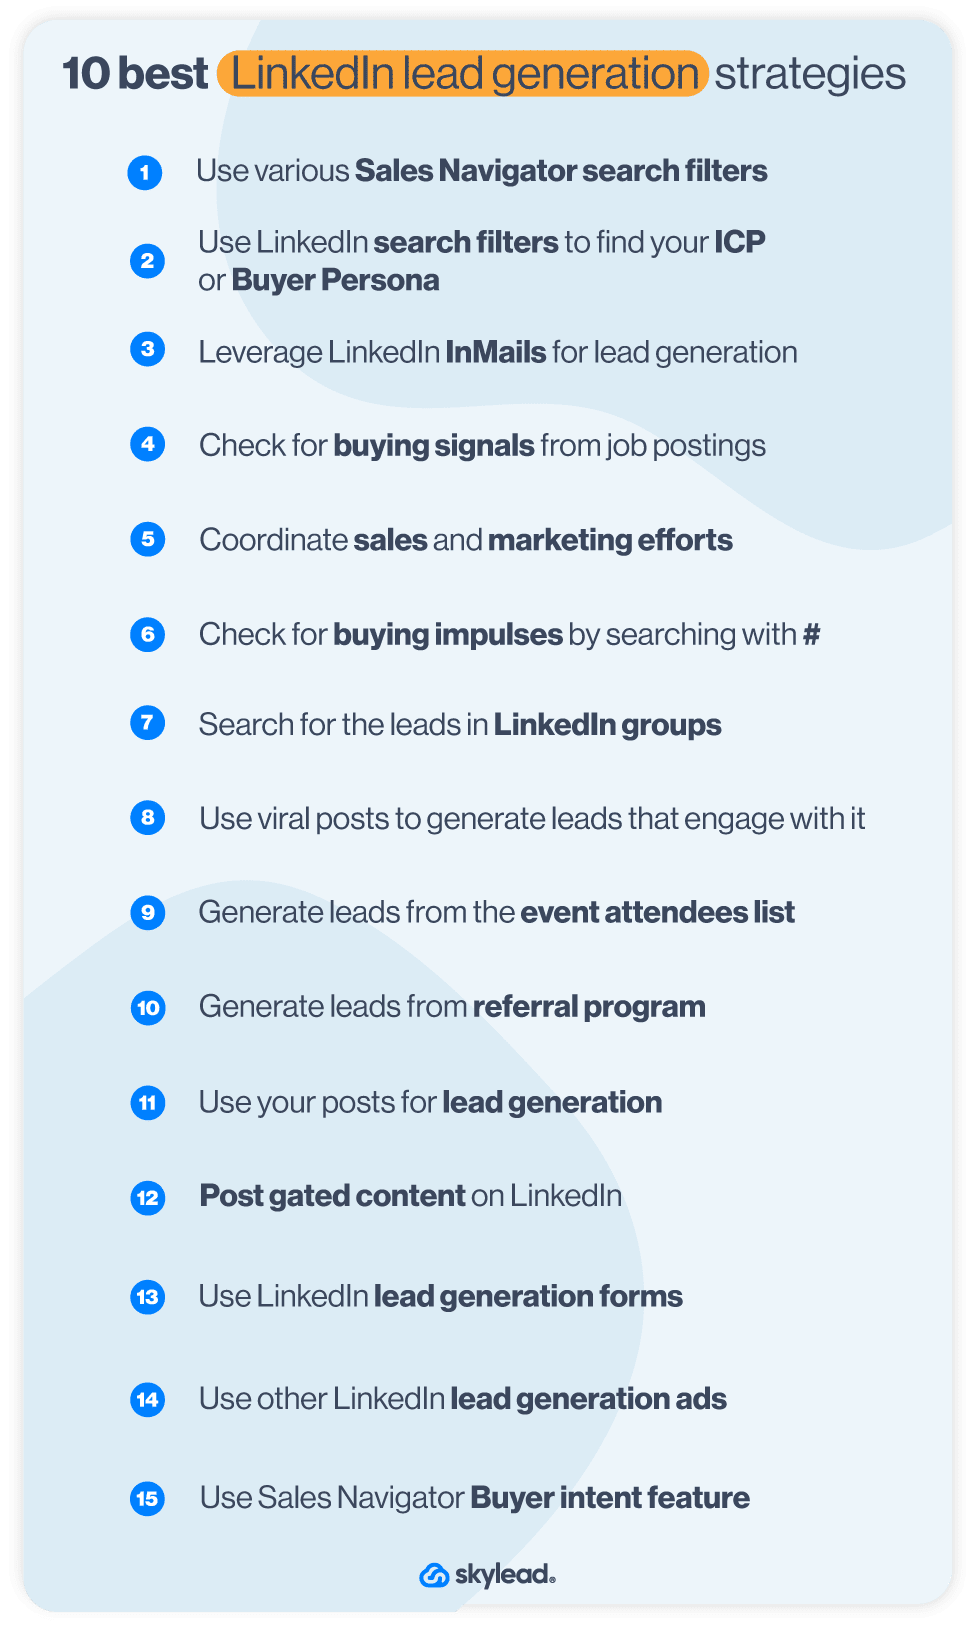 Image of list of 10 best LinkedIn lead generation strategies